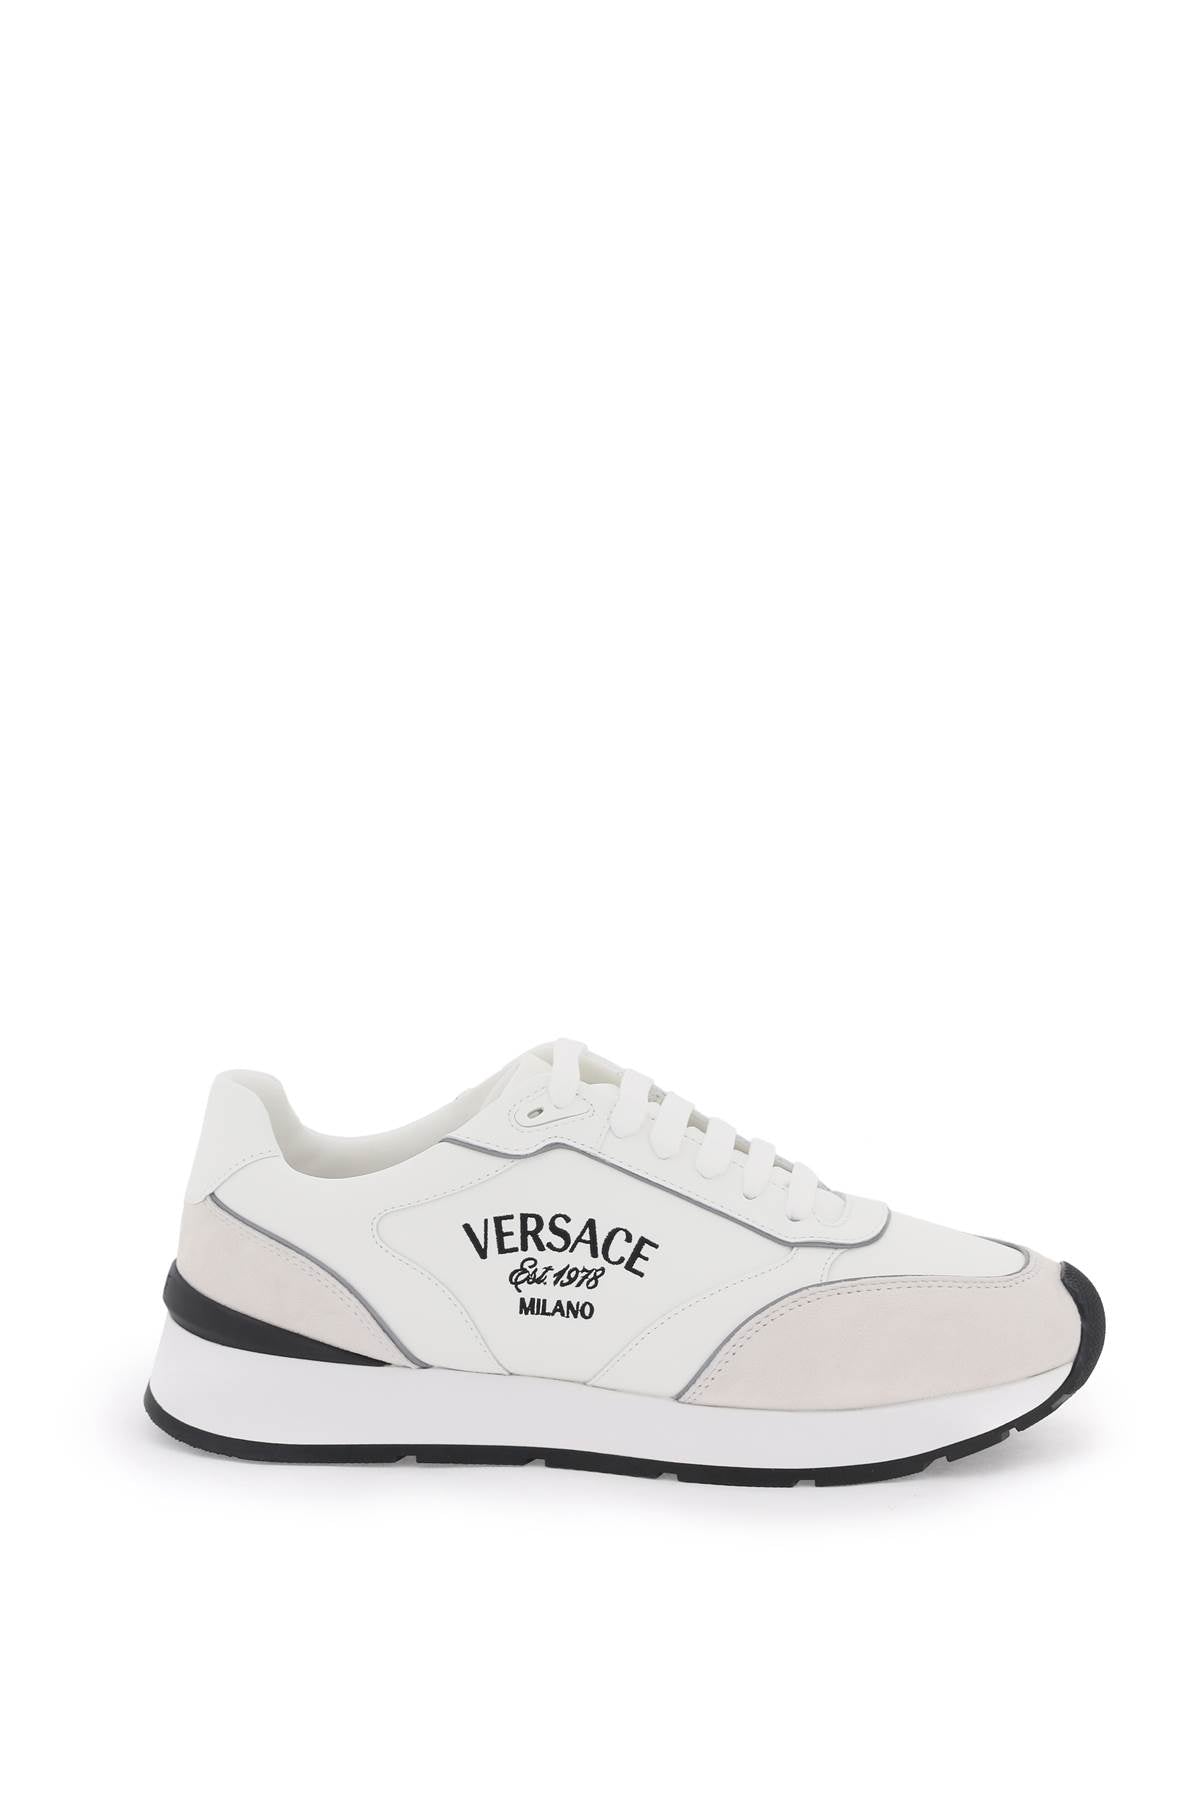 Versace milano runner sneakers-0